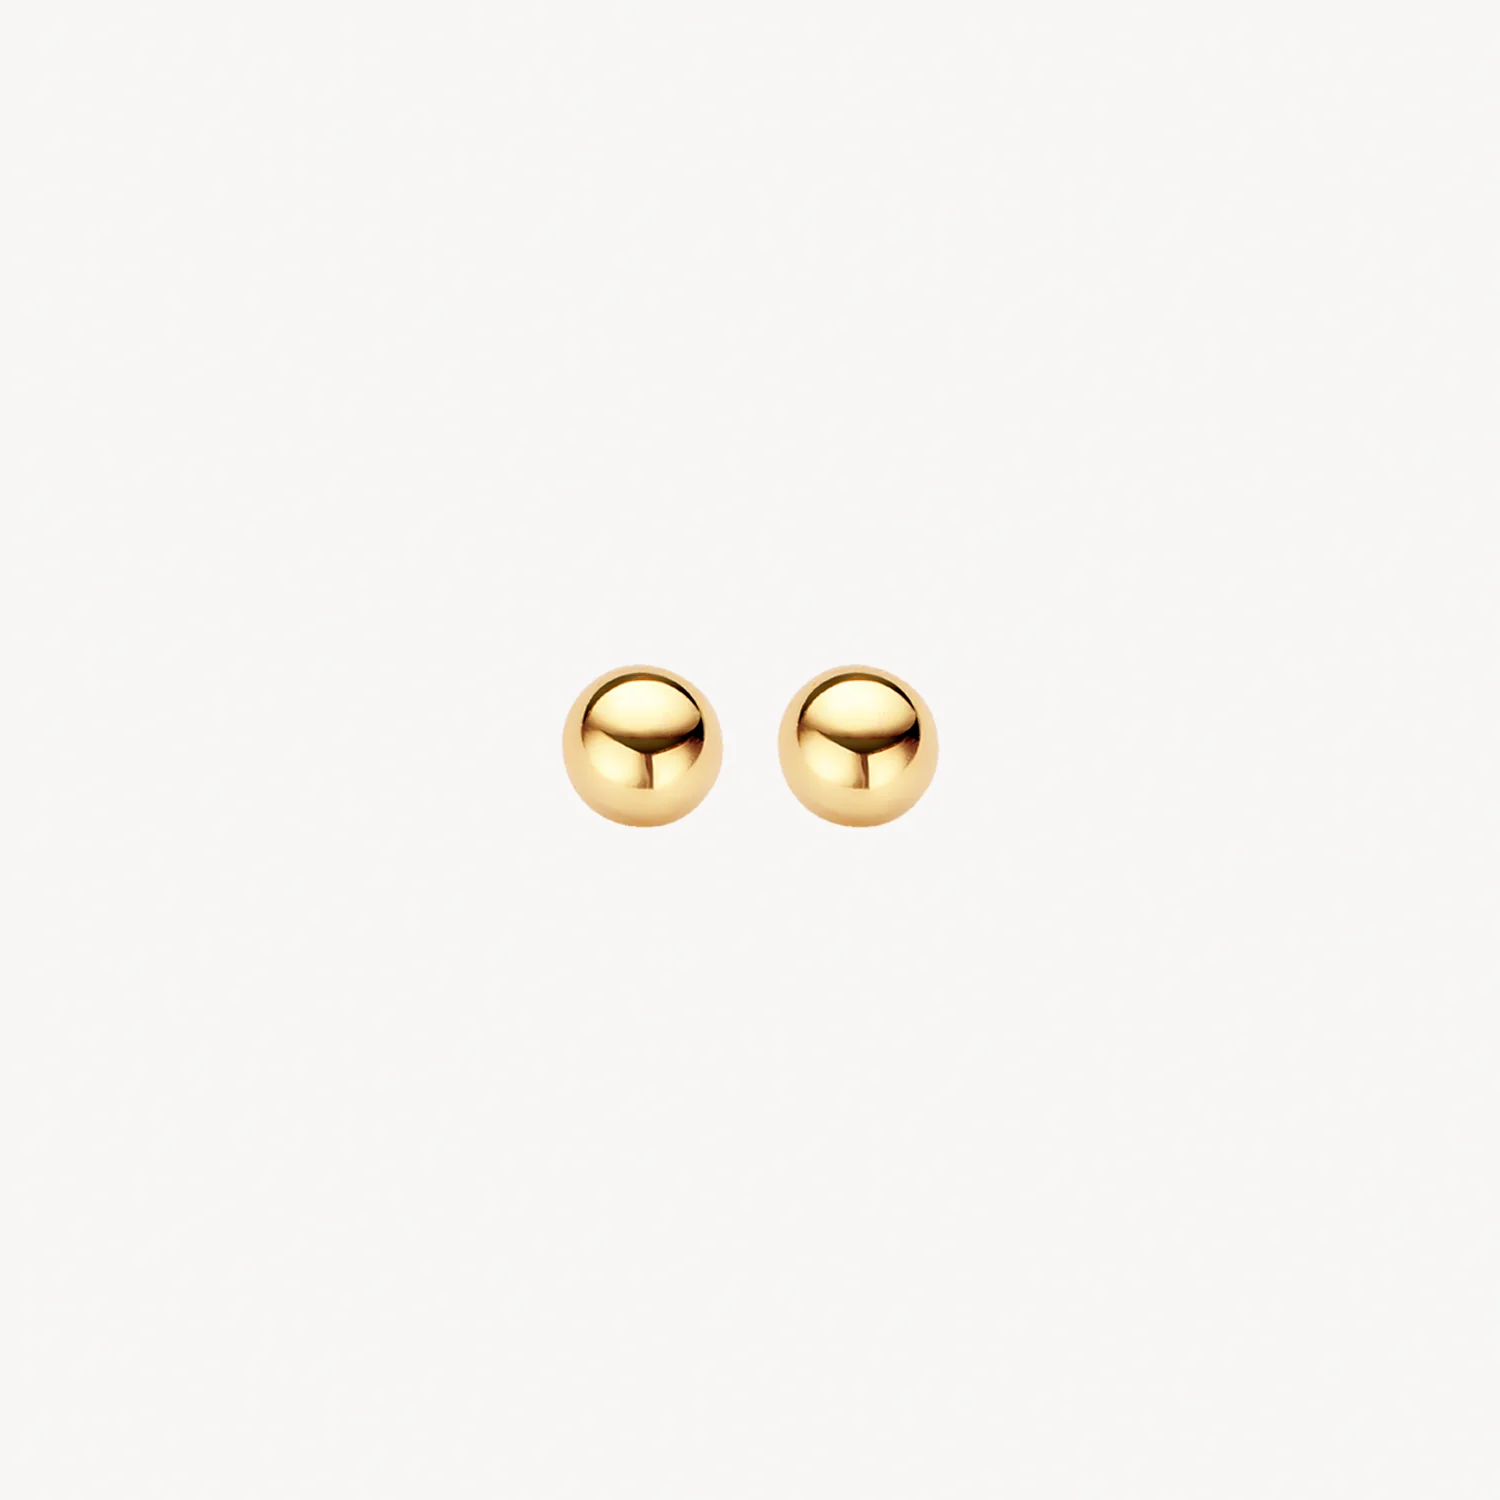 Blush Yellow Gold Ball Stud Earrings - Medium